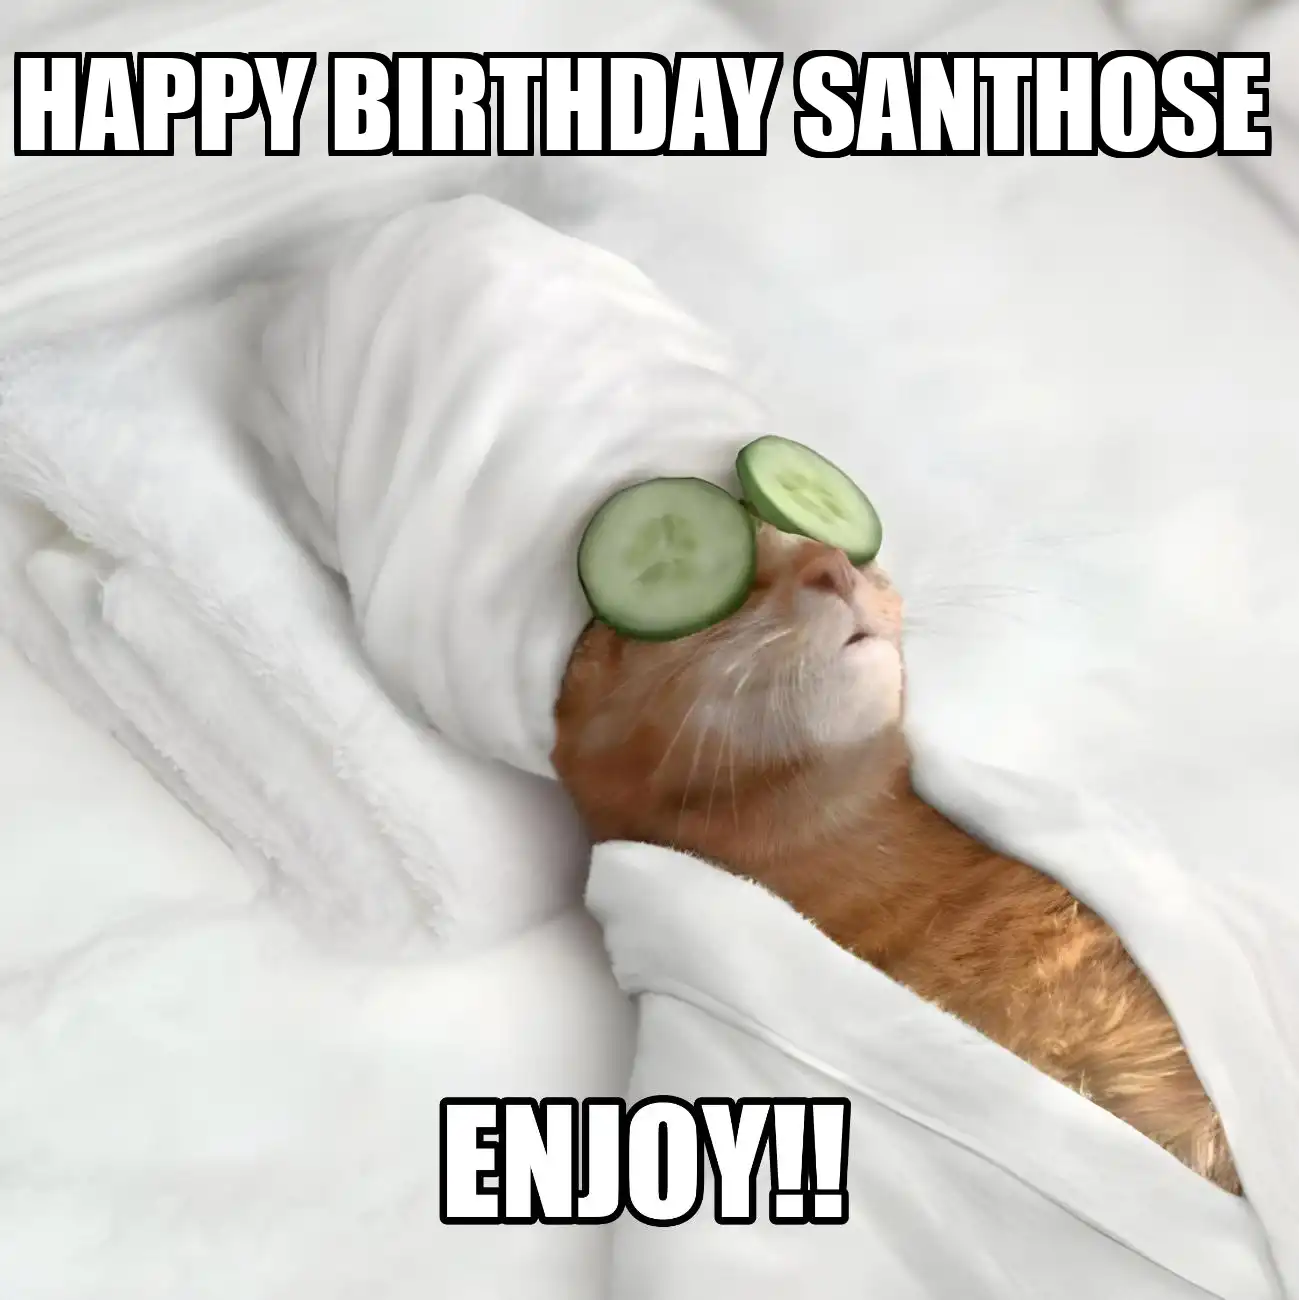 Happy Birthday Santhose Enjoy Cat Meme